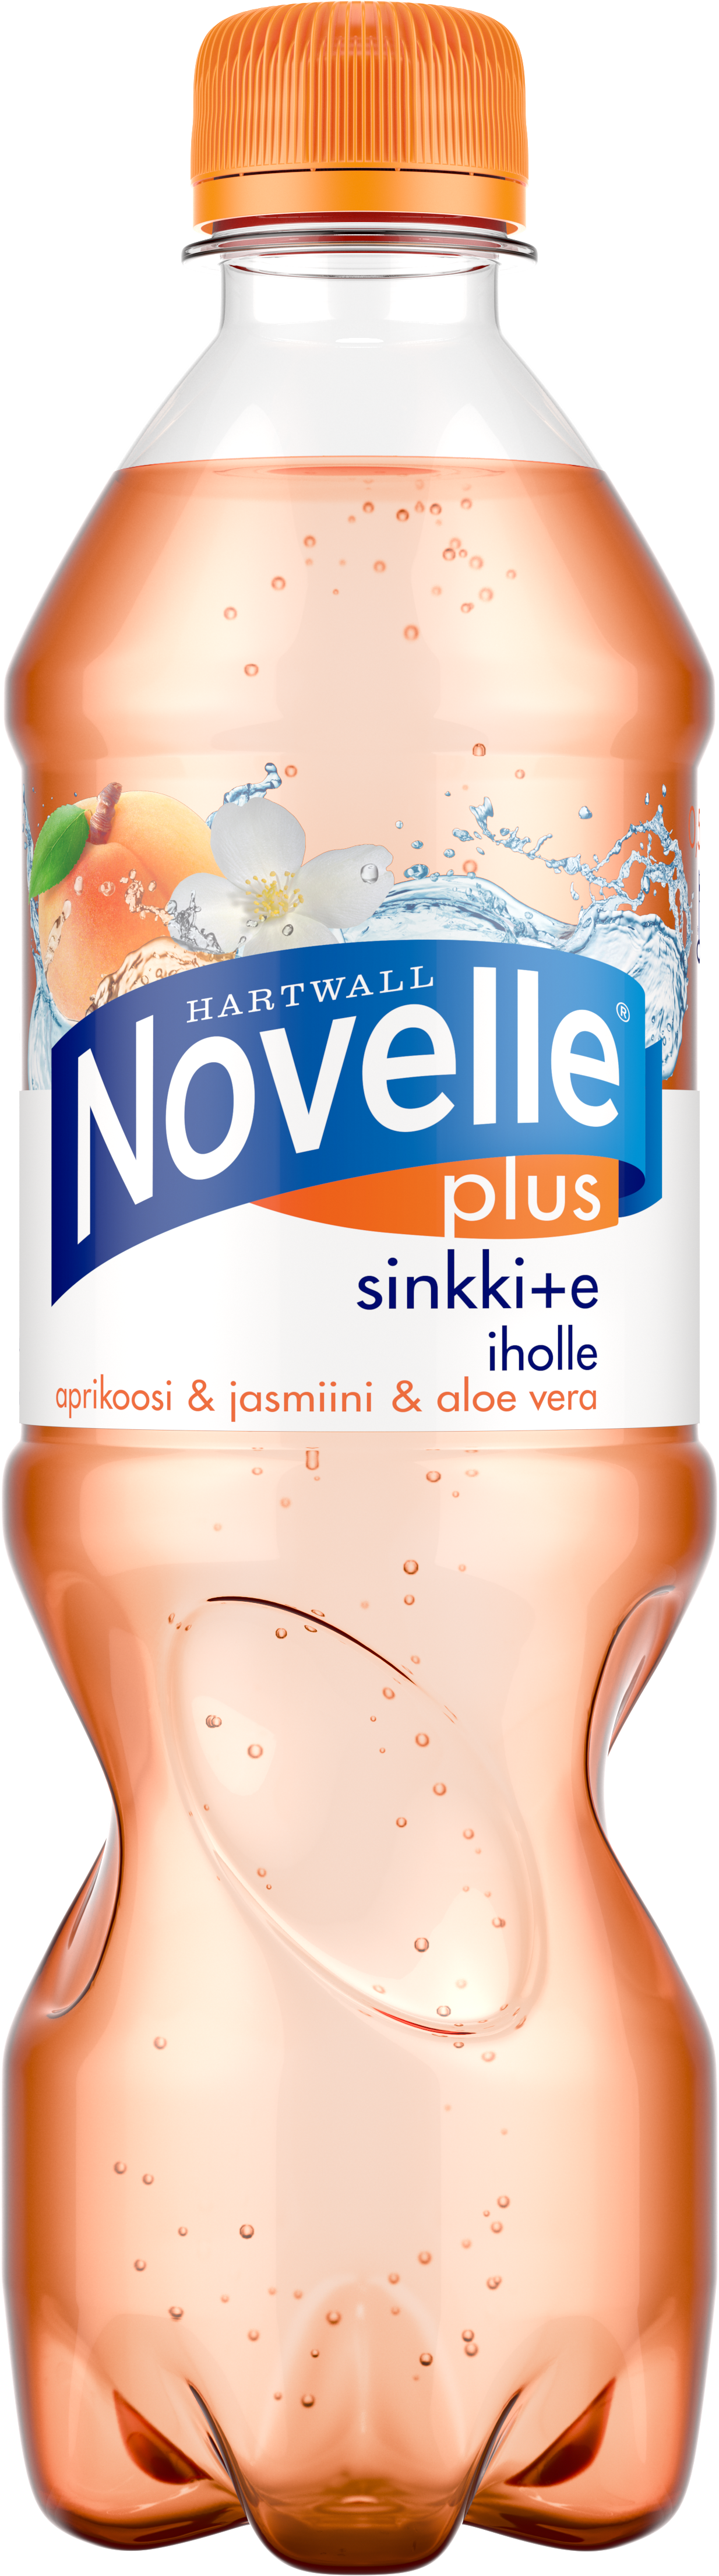 Novelle Plus Sinkki+E